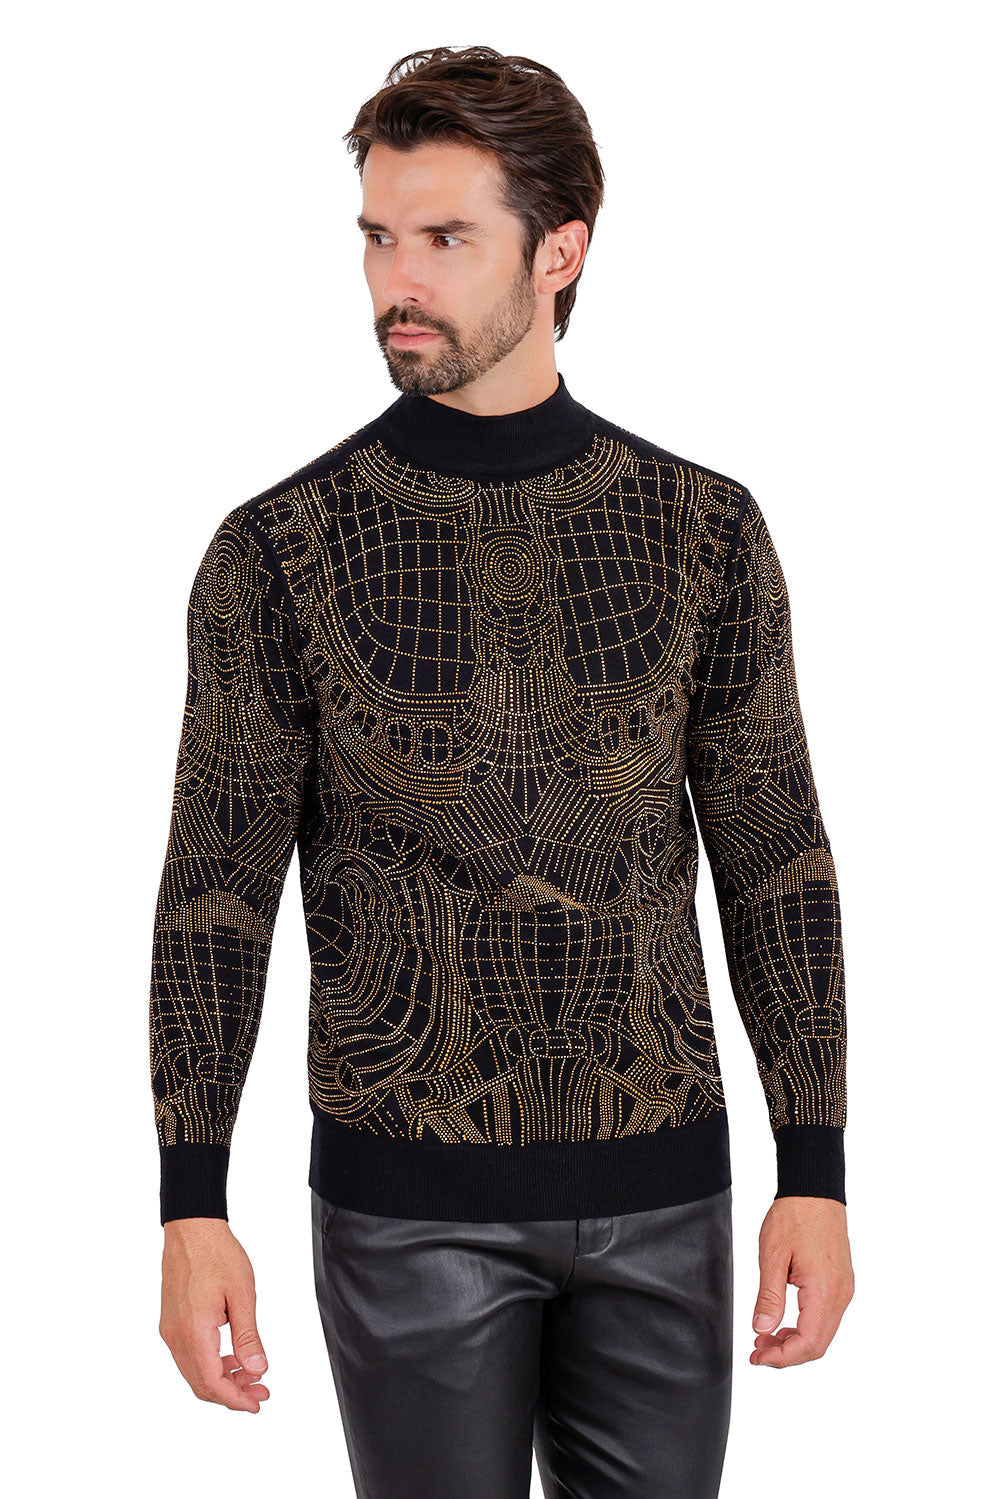 Barabas Men's Rhinestone Long Sleeve Turtleneck Sweater 3LS2107 Gold